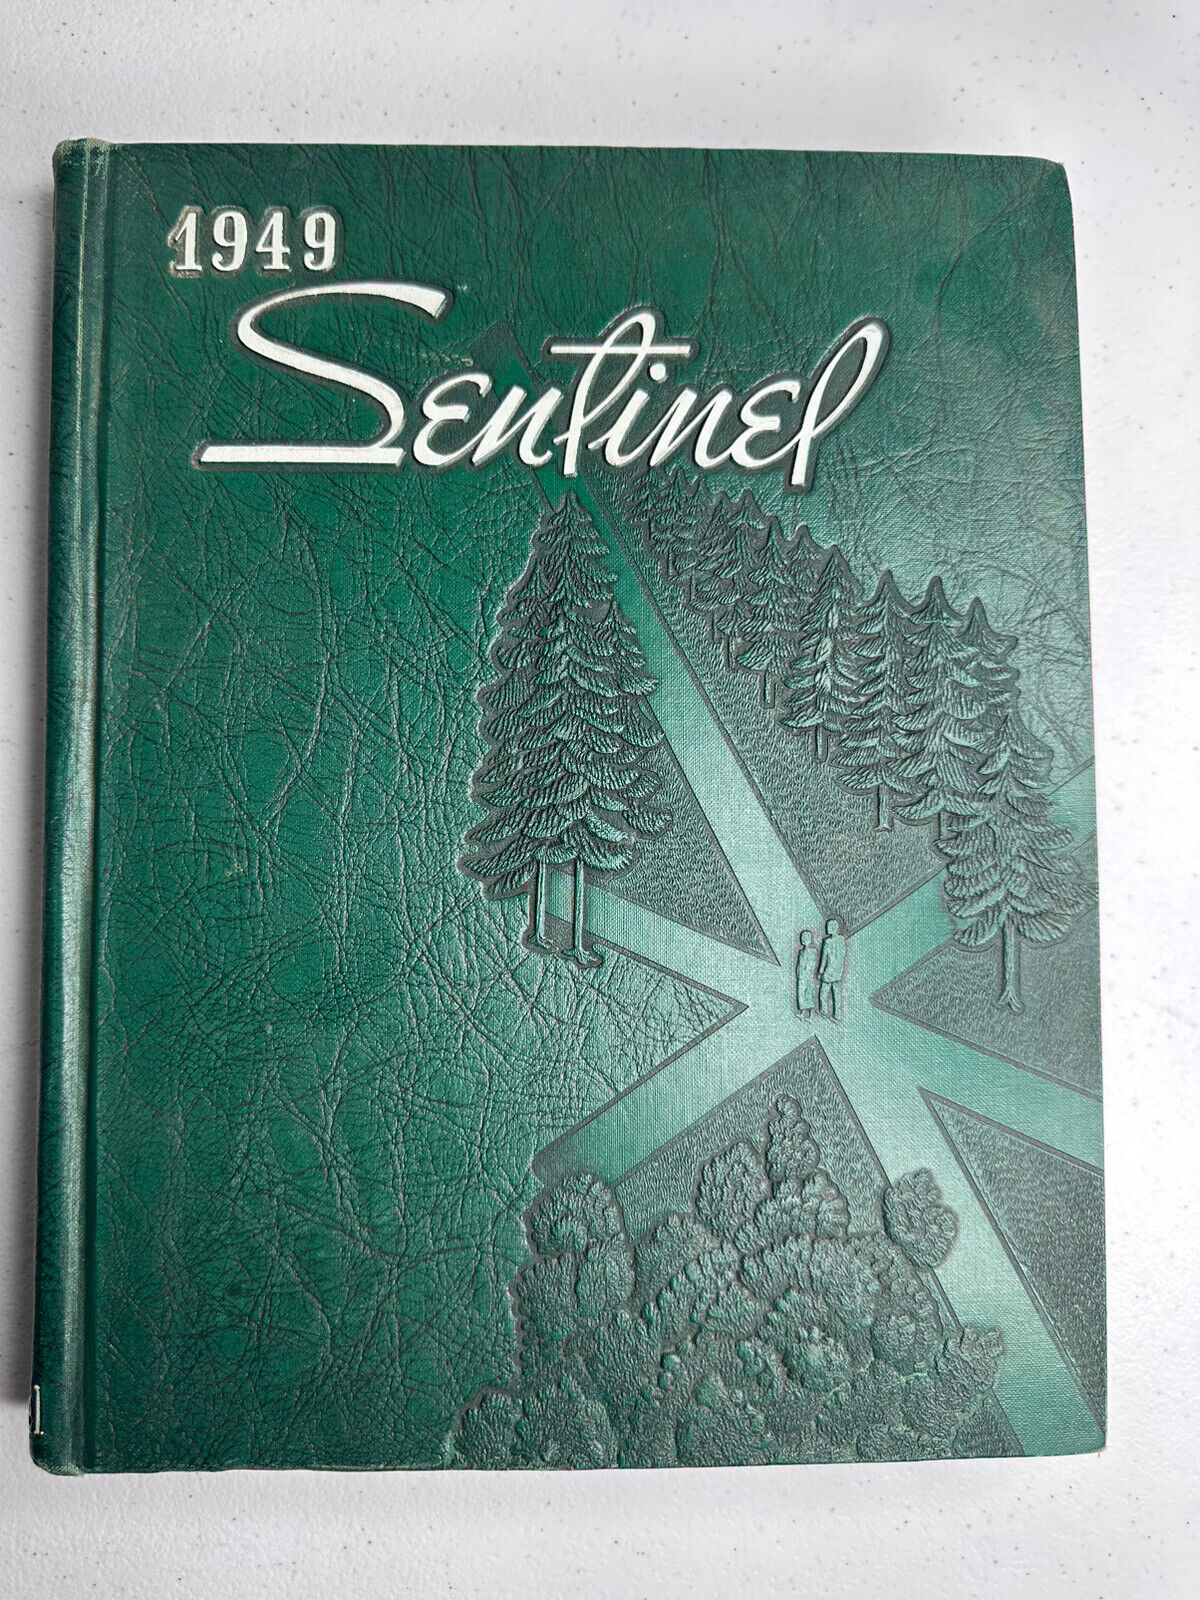 1949 Sentinel Montana State University Collectible Yearbook - Nostalgic Keepsake